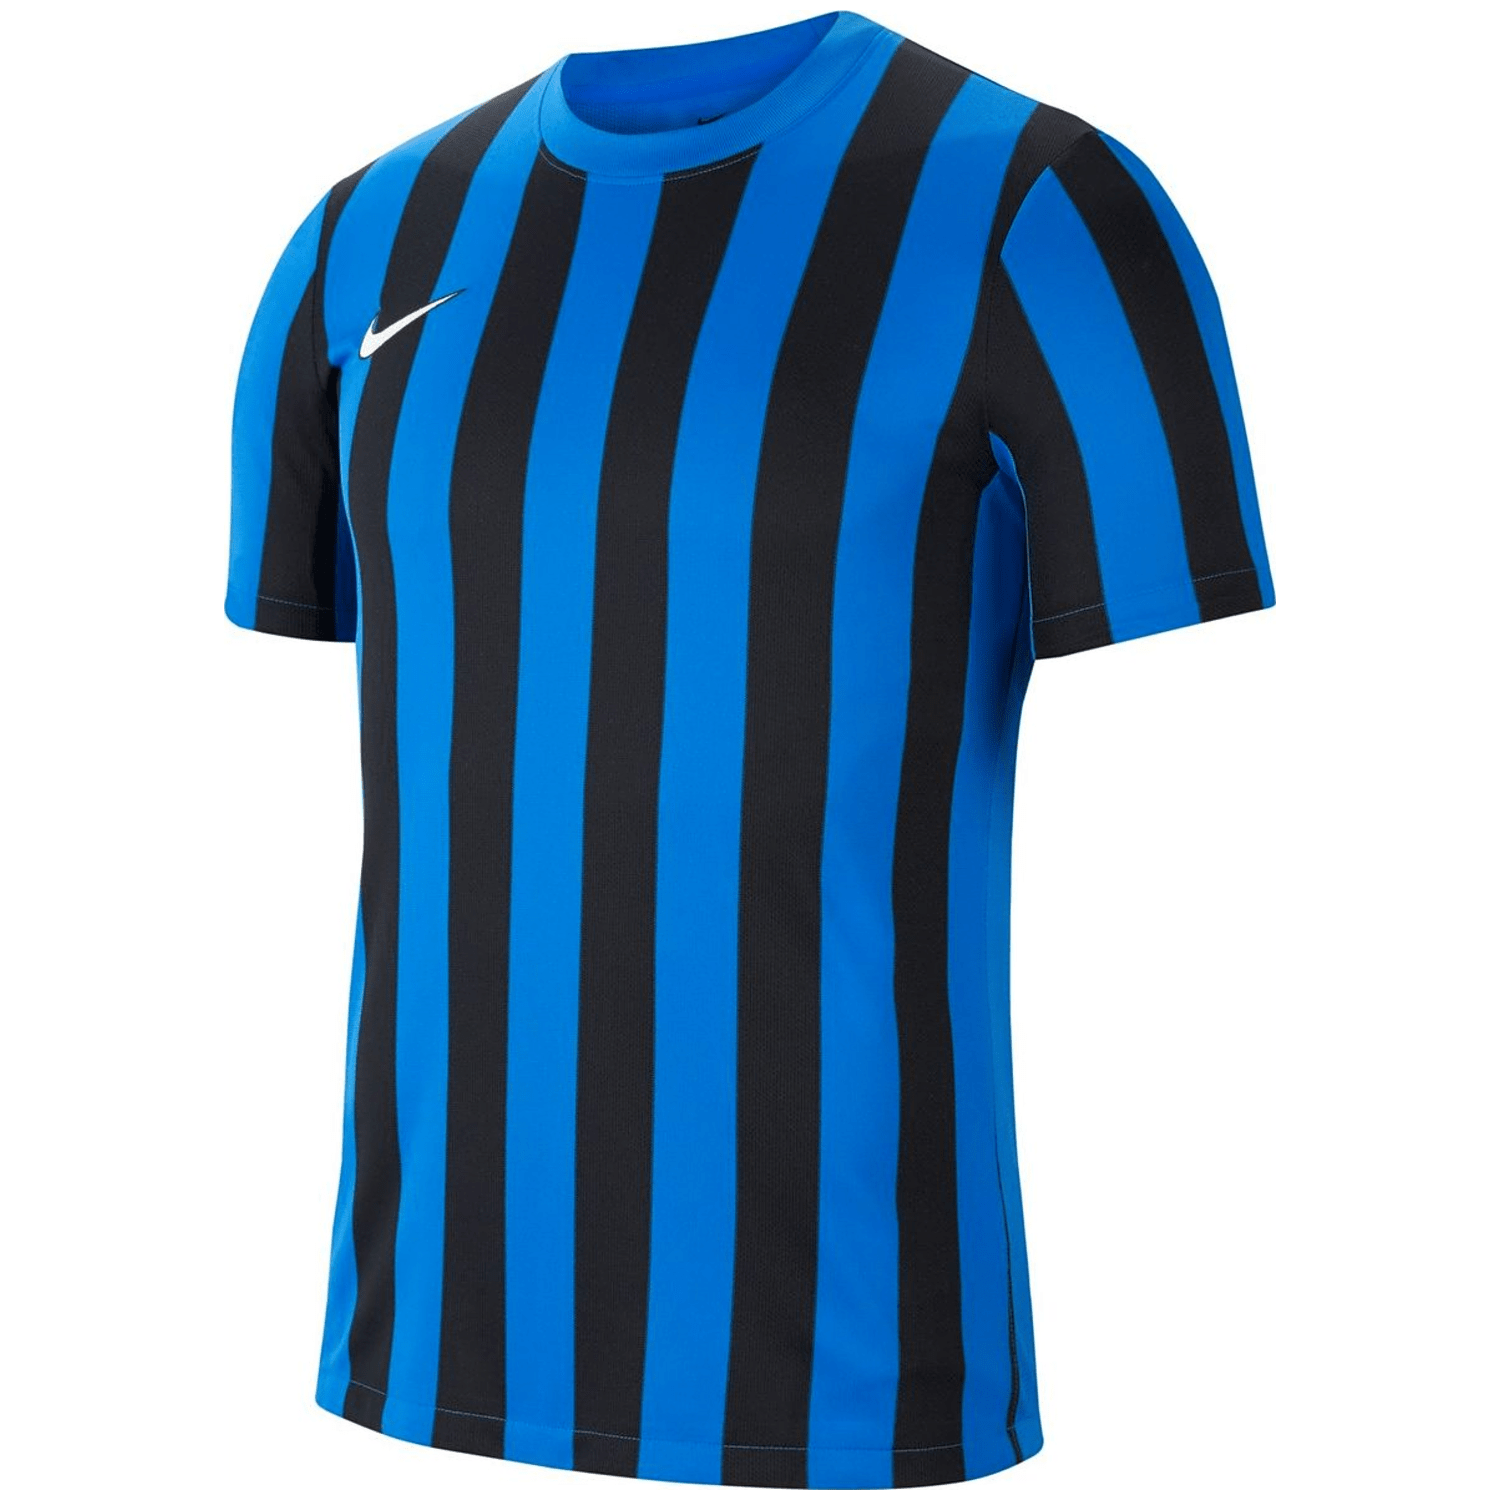 Nike Dri-FIT Division 4 Striped Herren Trikot